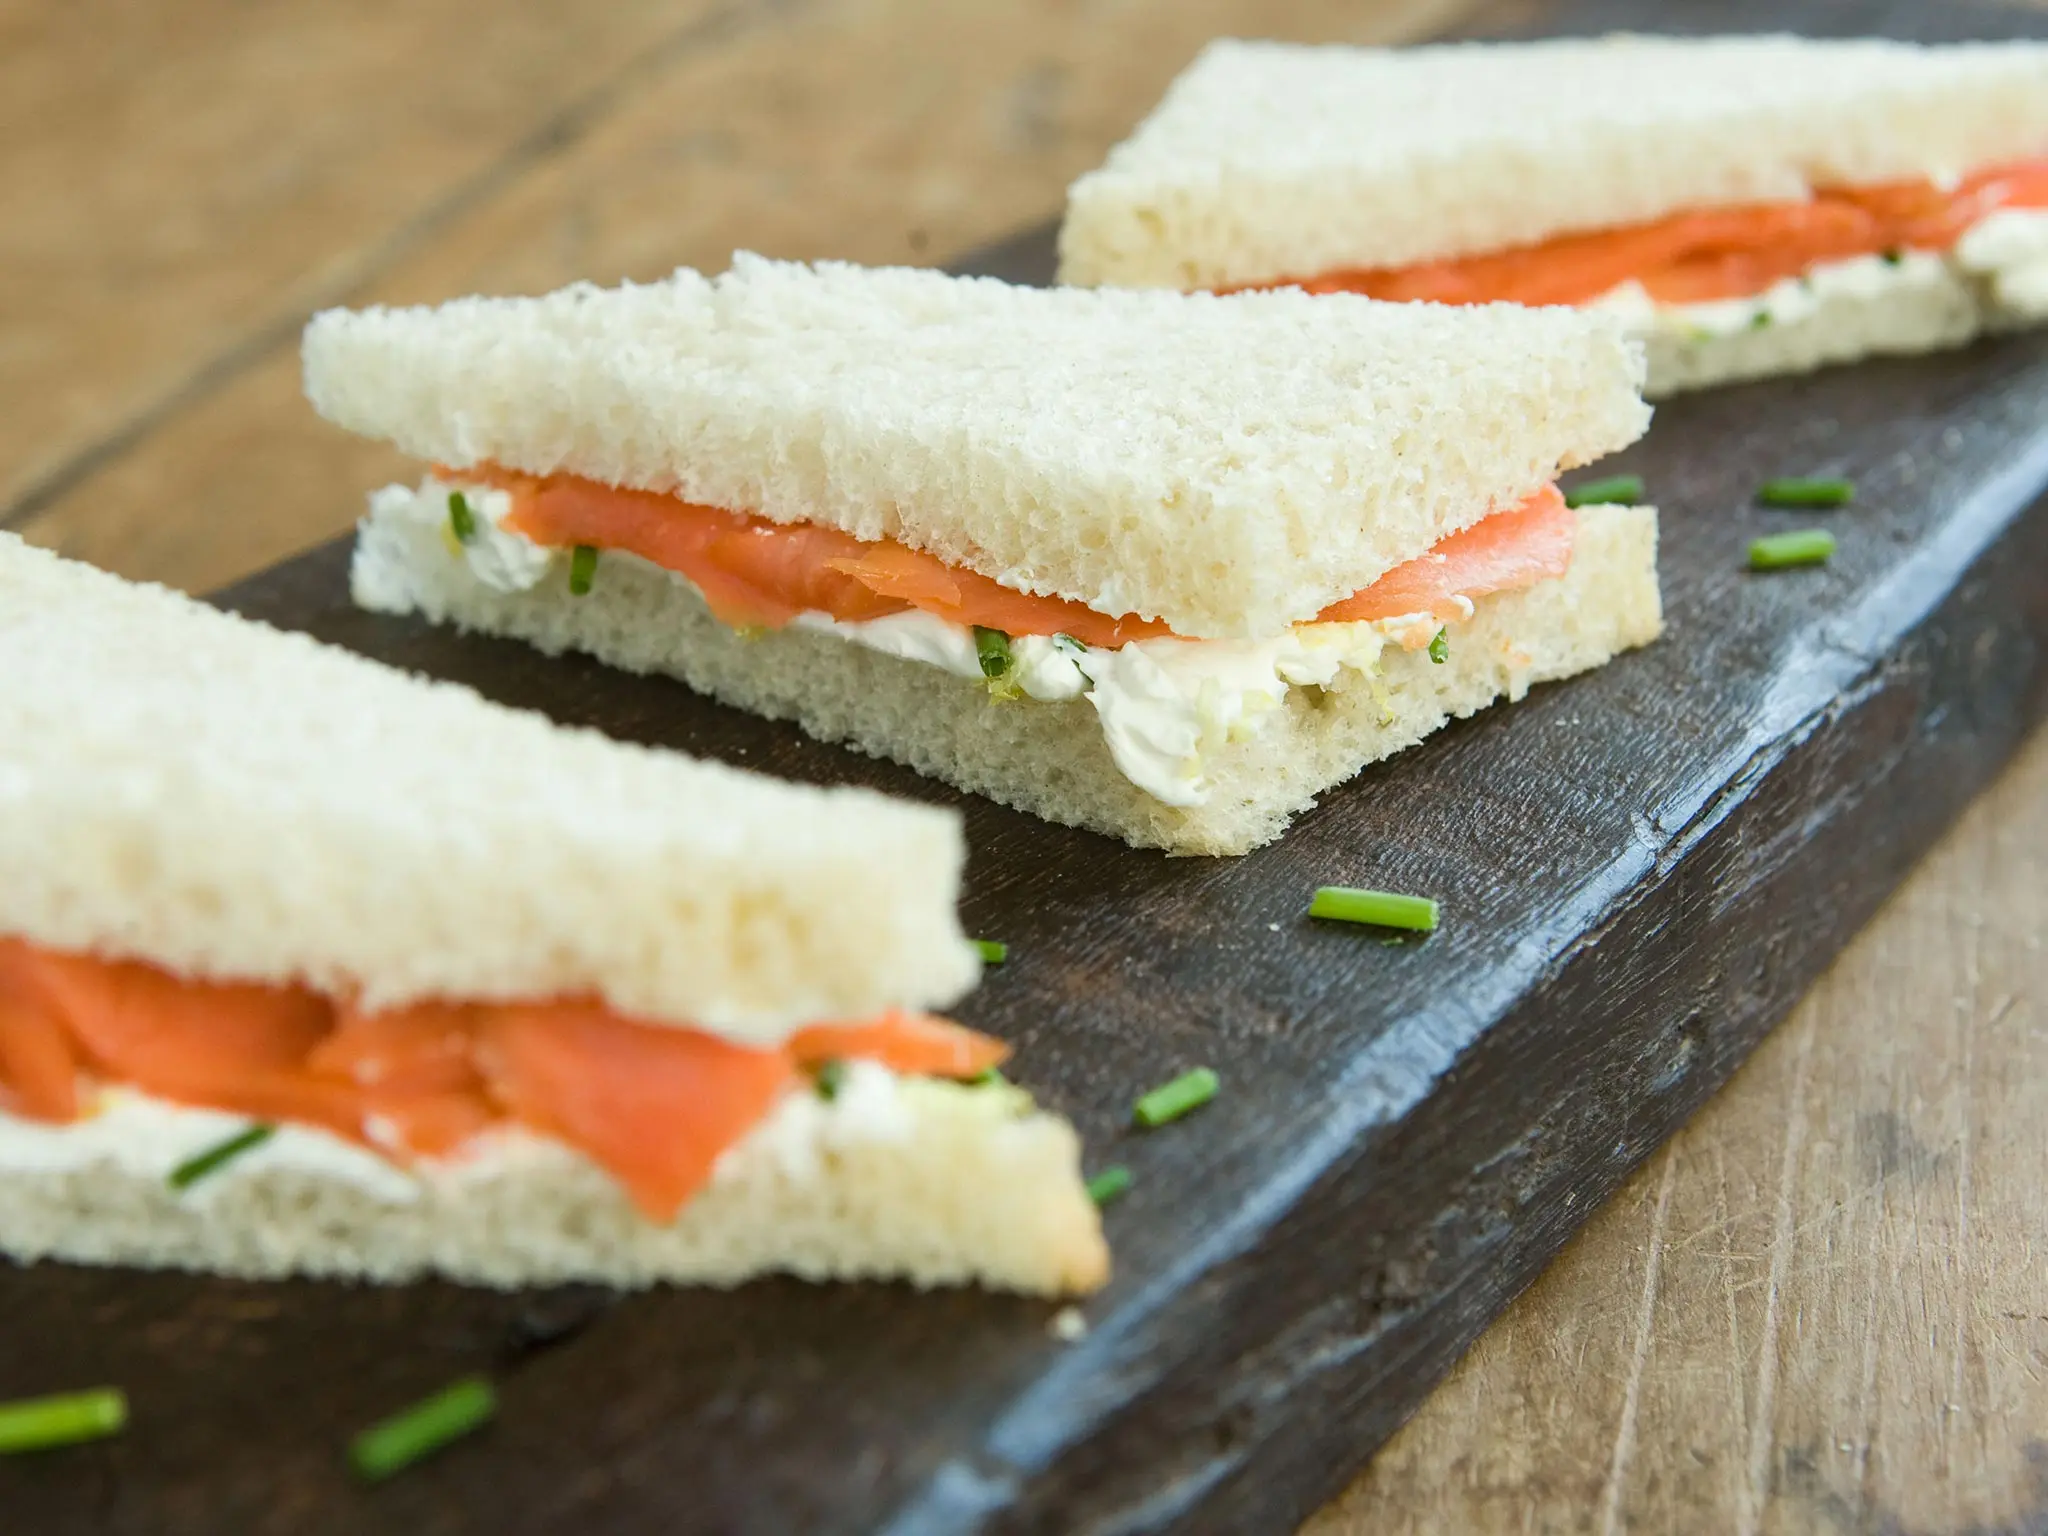 smoked salmon and cream cheese sandwich - How many calories in a smoked salmon and cream cheese sandwich